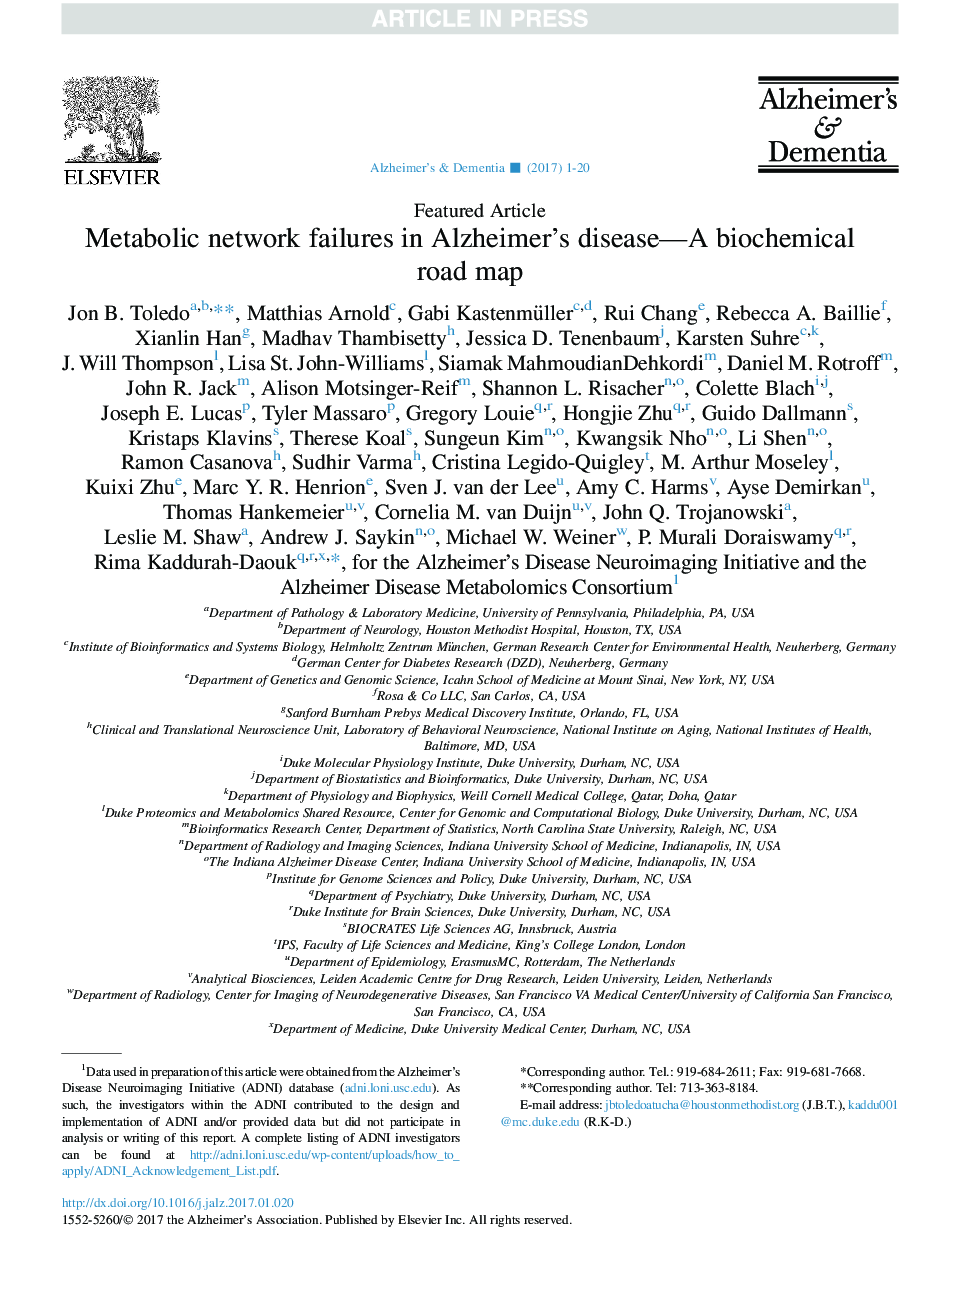 Metabolic network failures in Alzheimer's disease: A biochemical roadÂ map